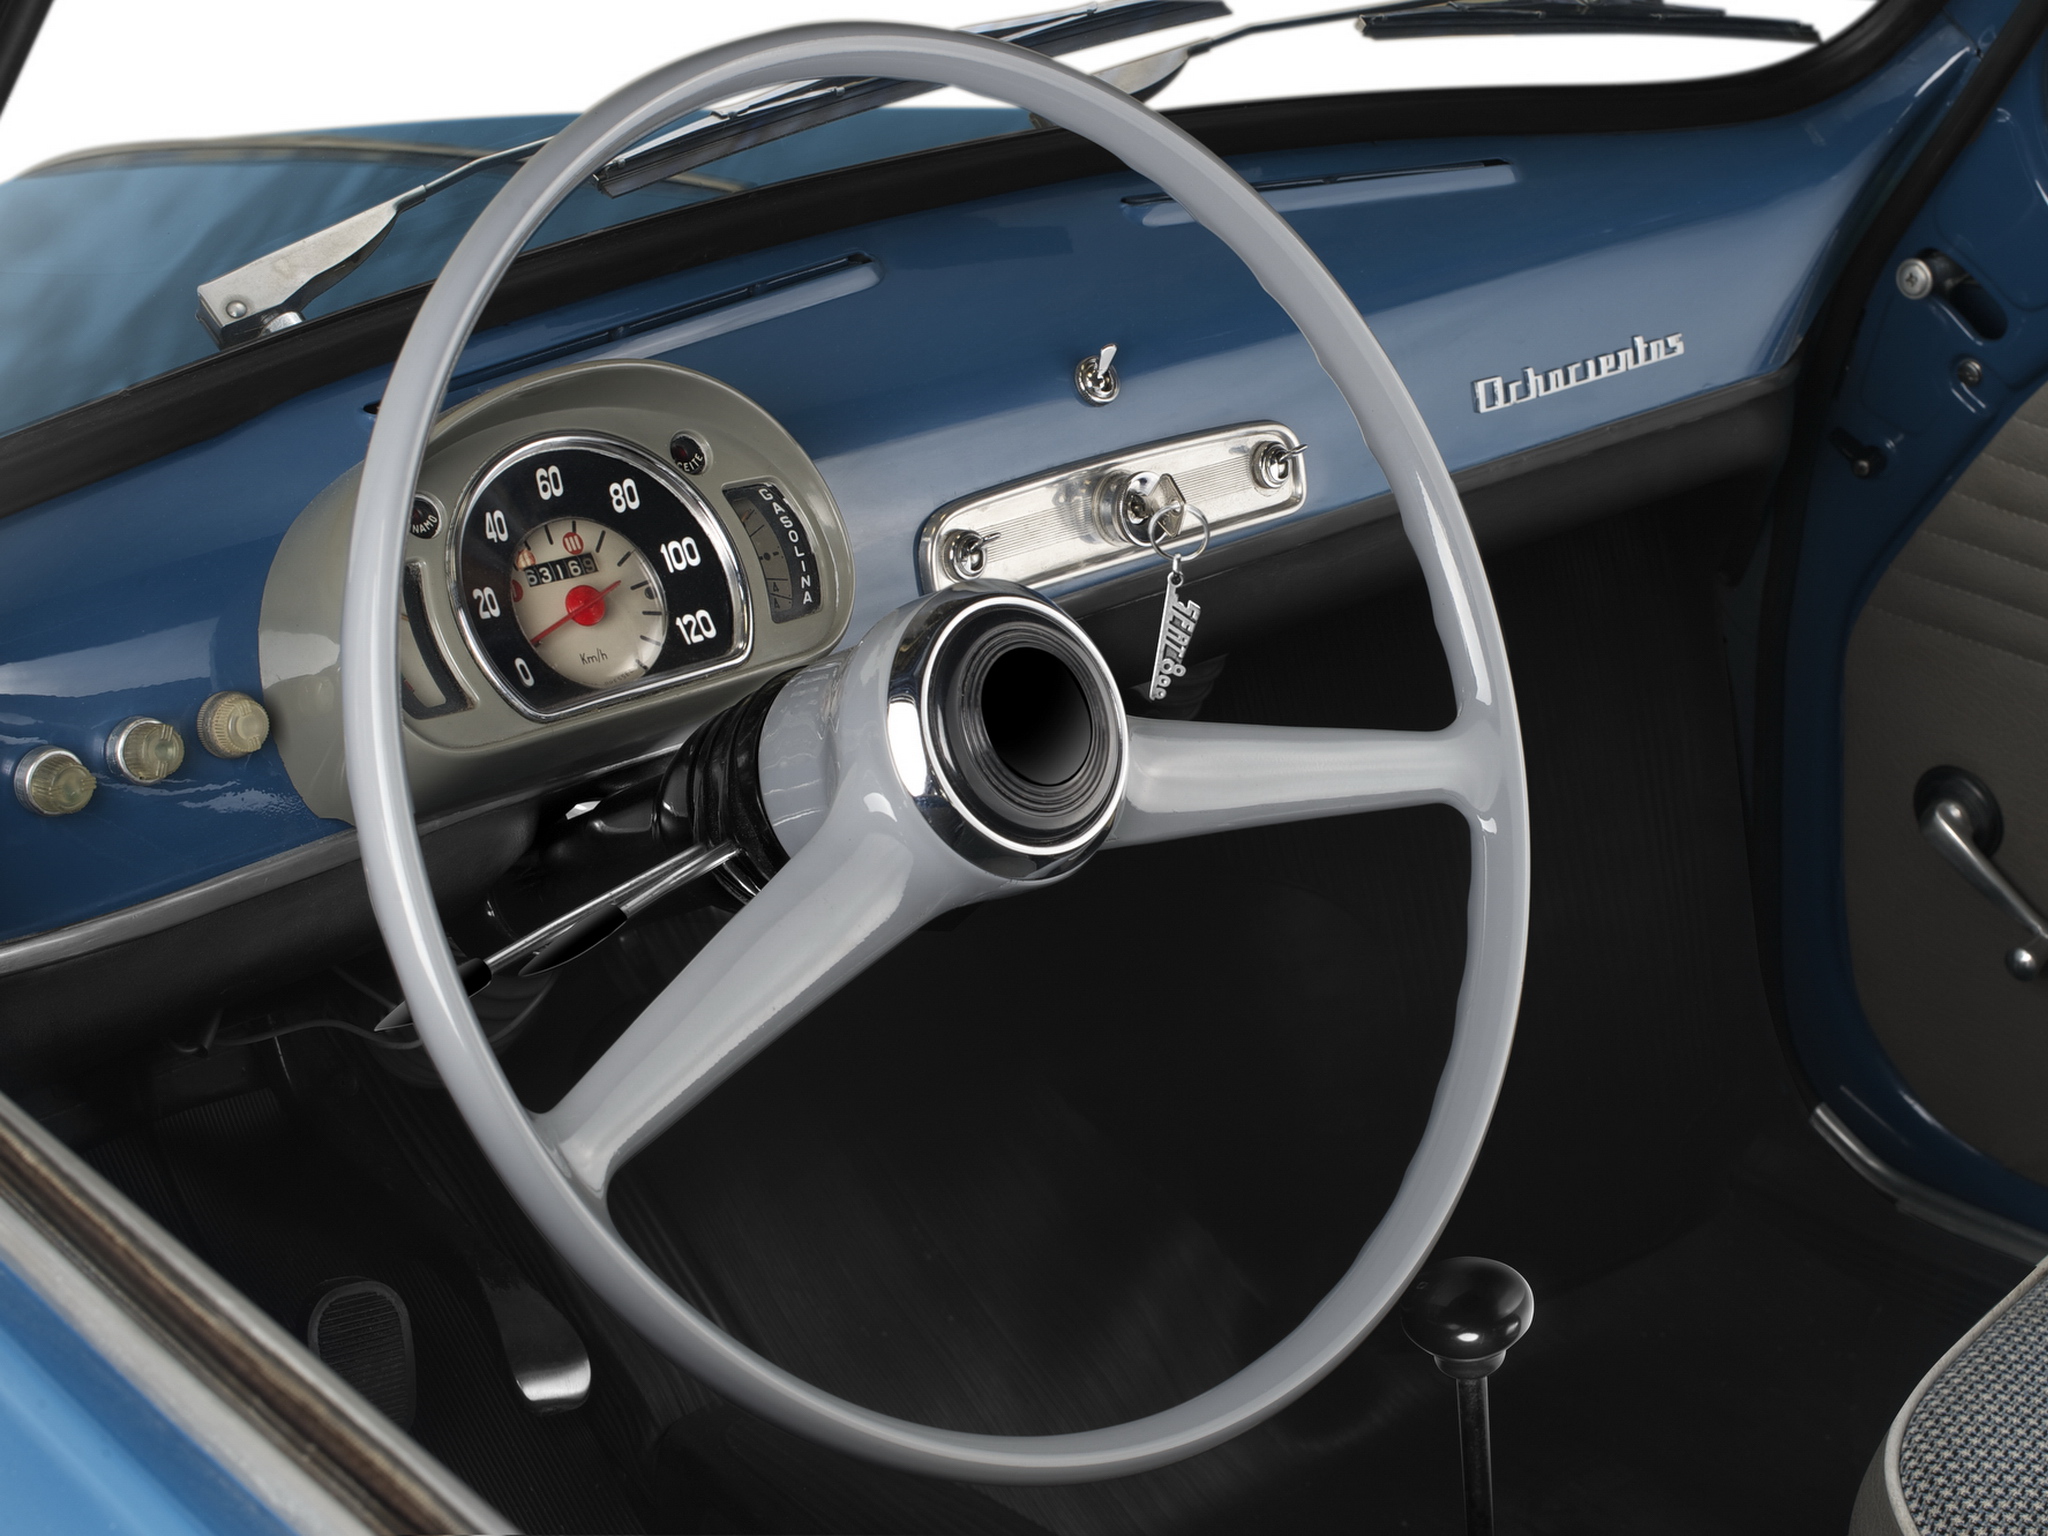 SEAT 800 1964-1967